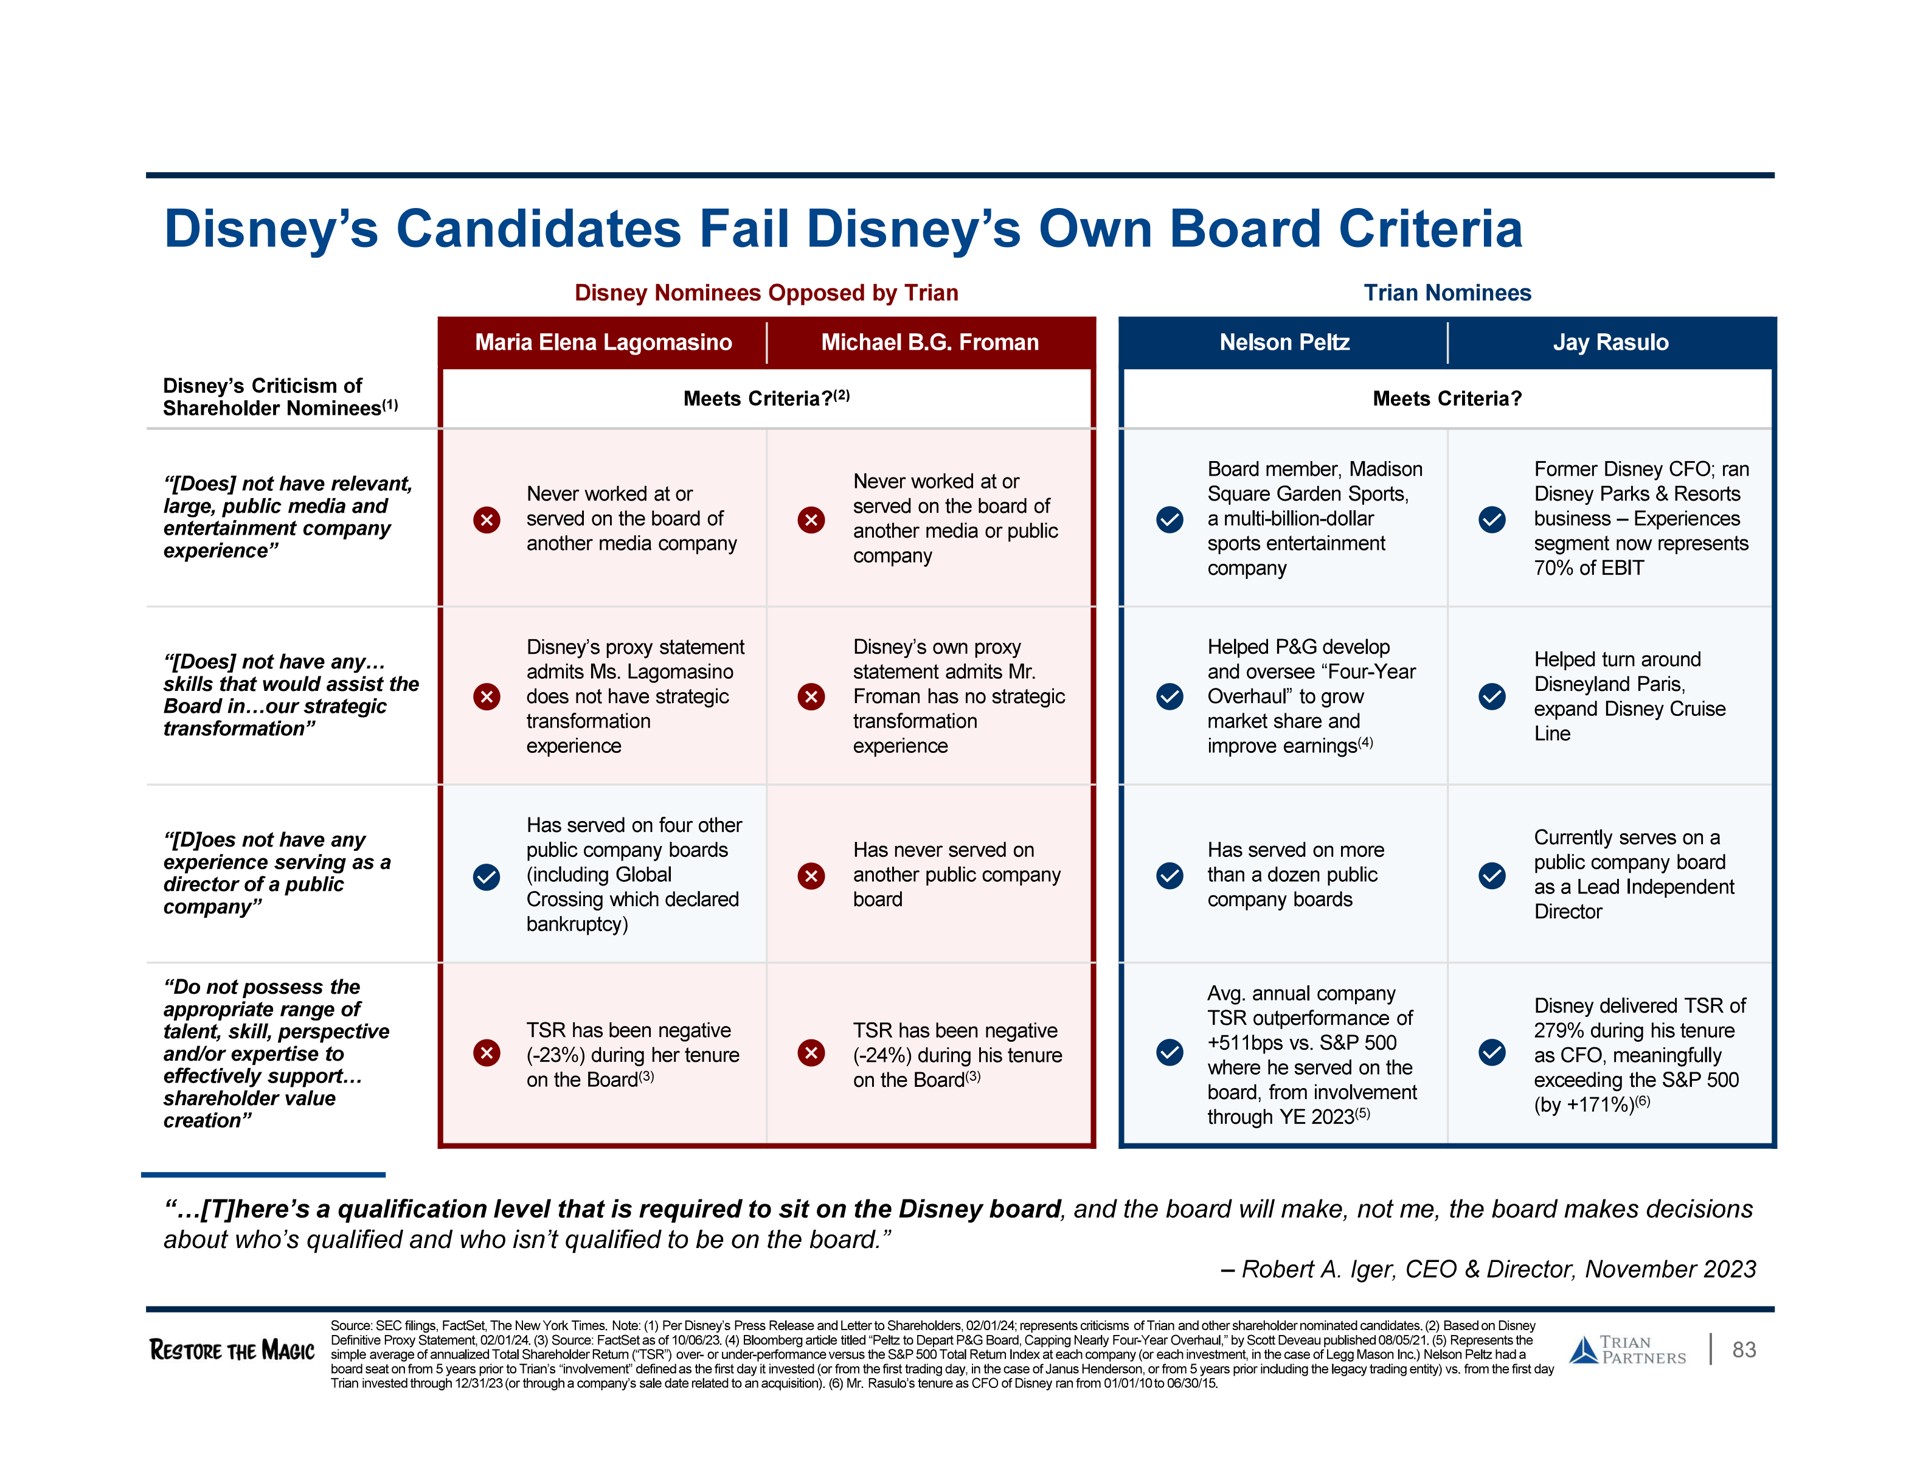 candidates fail own board criteria | Trian Partners